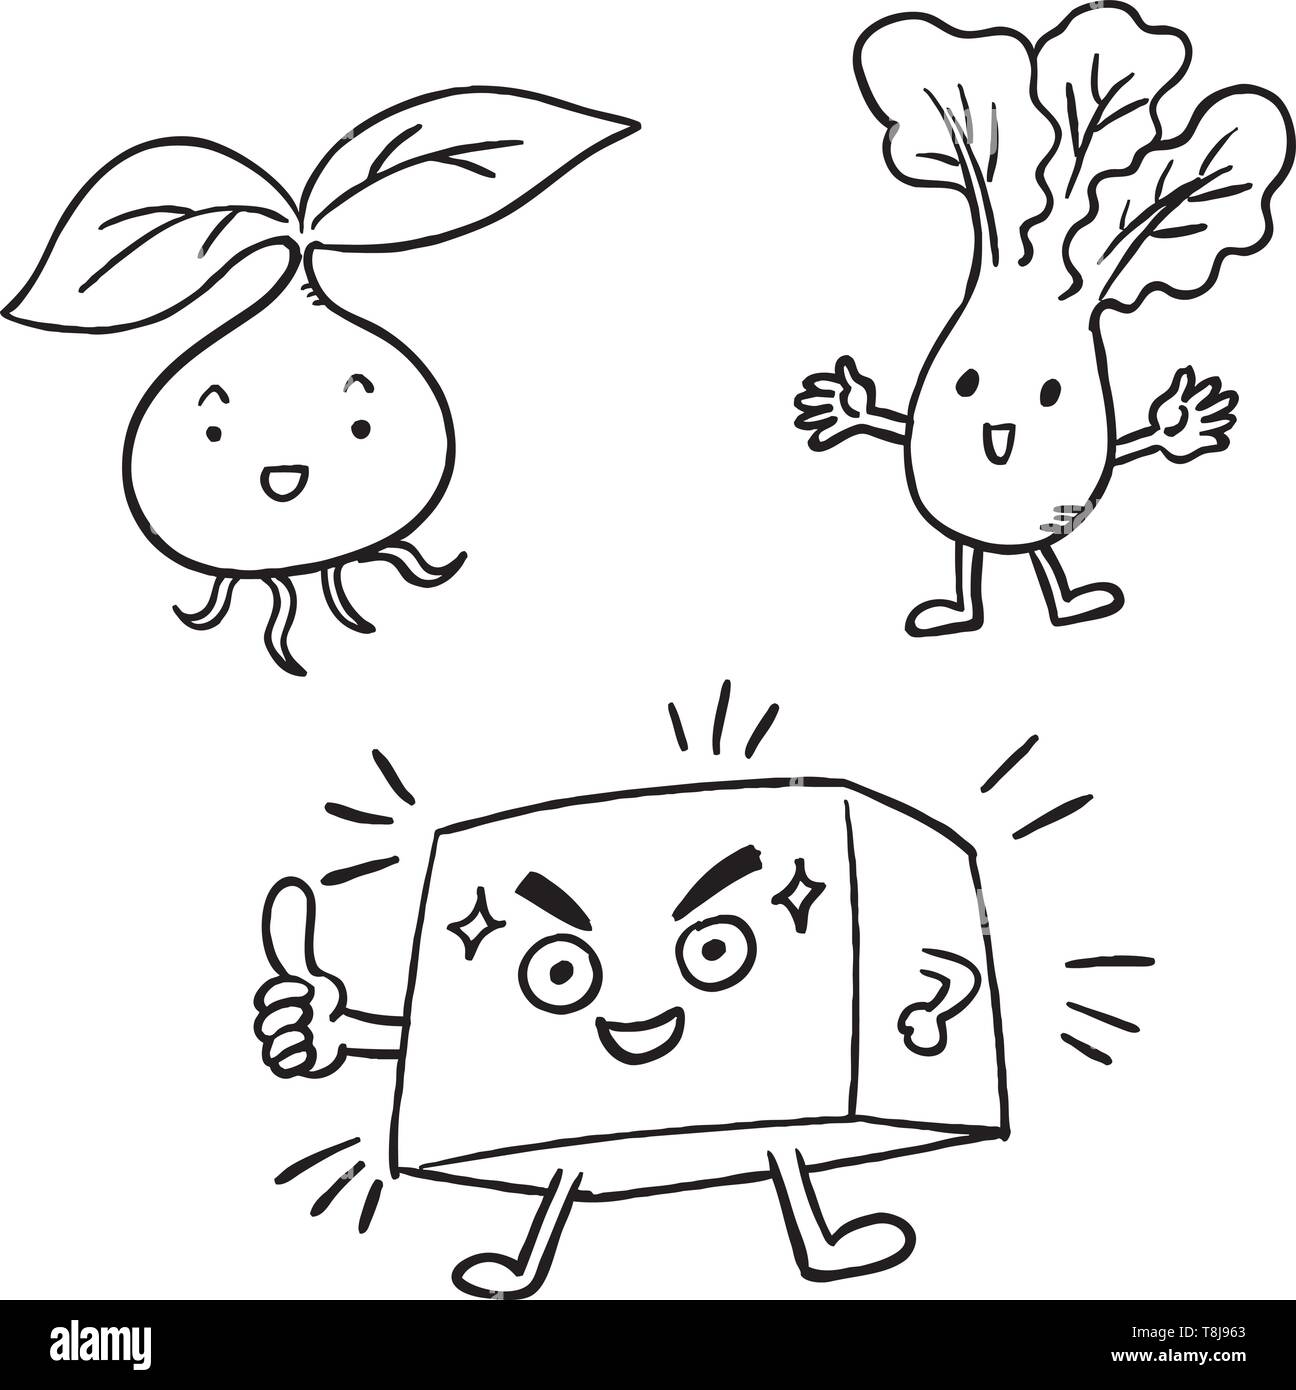 Vegetable line cartoon character vector illustration Stock Vector